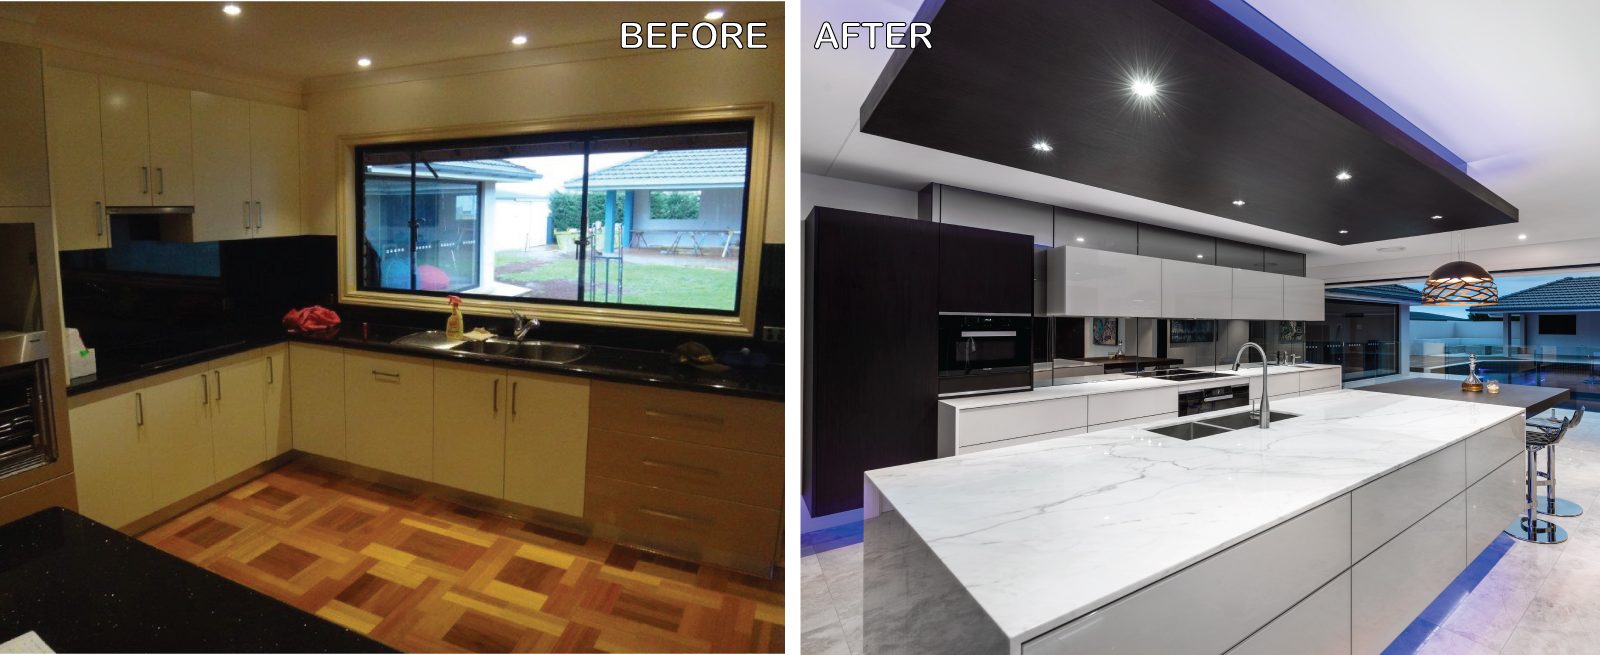 Kitchen Design Brisbane Australia Before and After